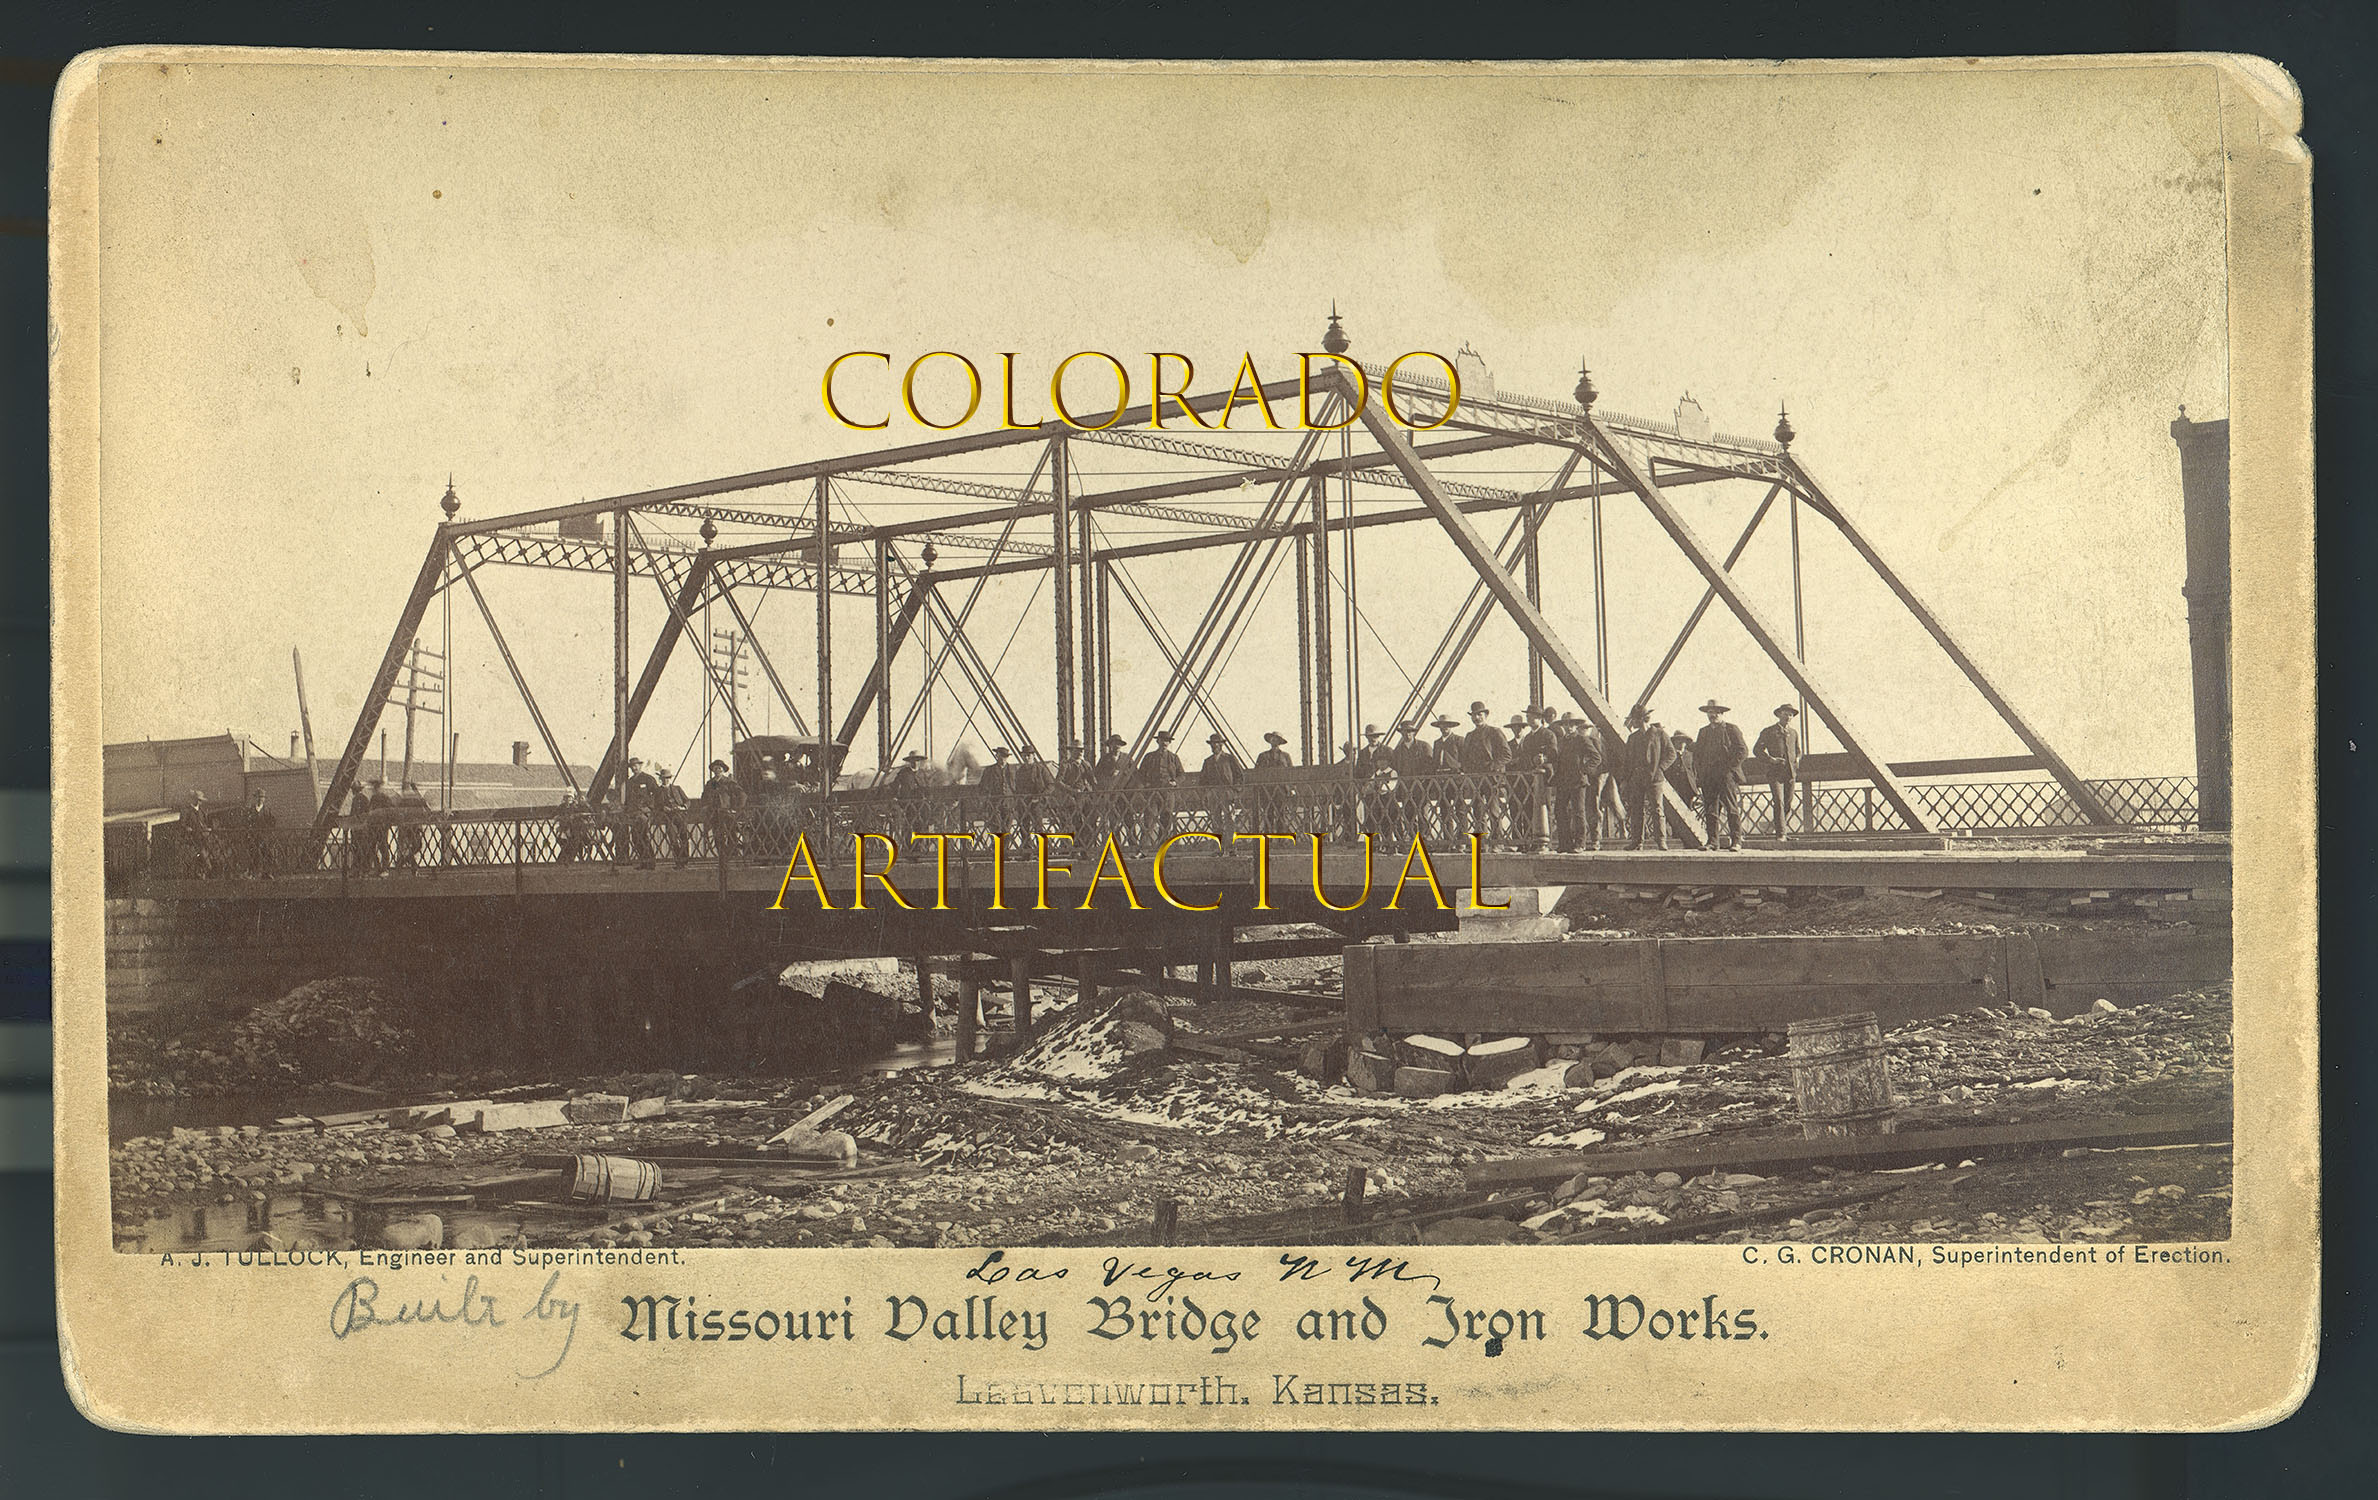 LAS VEGAS, NEW MEXICO TERRITORY, SUSPENSION BRIDGE, Tullock, engineer, photograph 1889